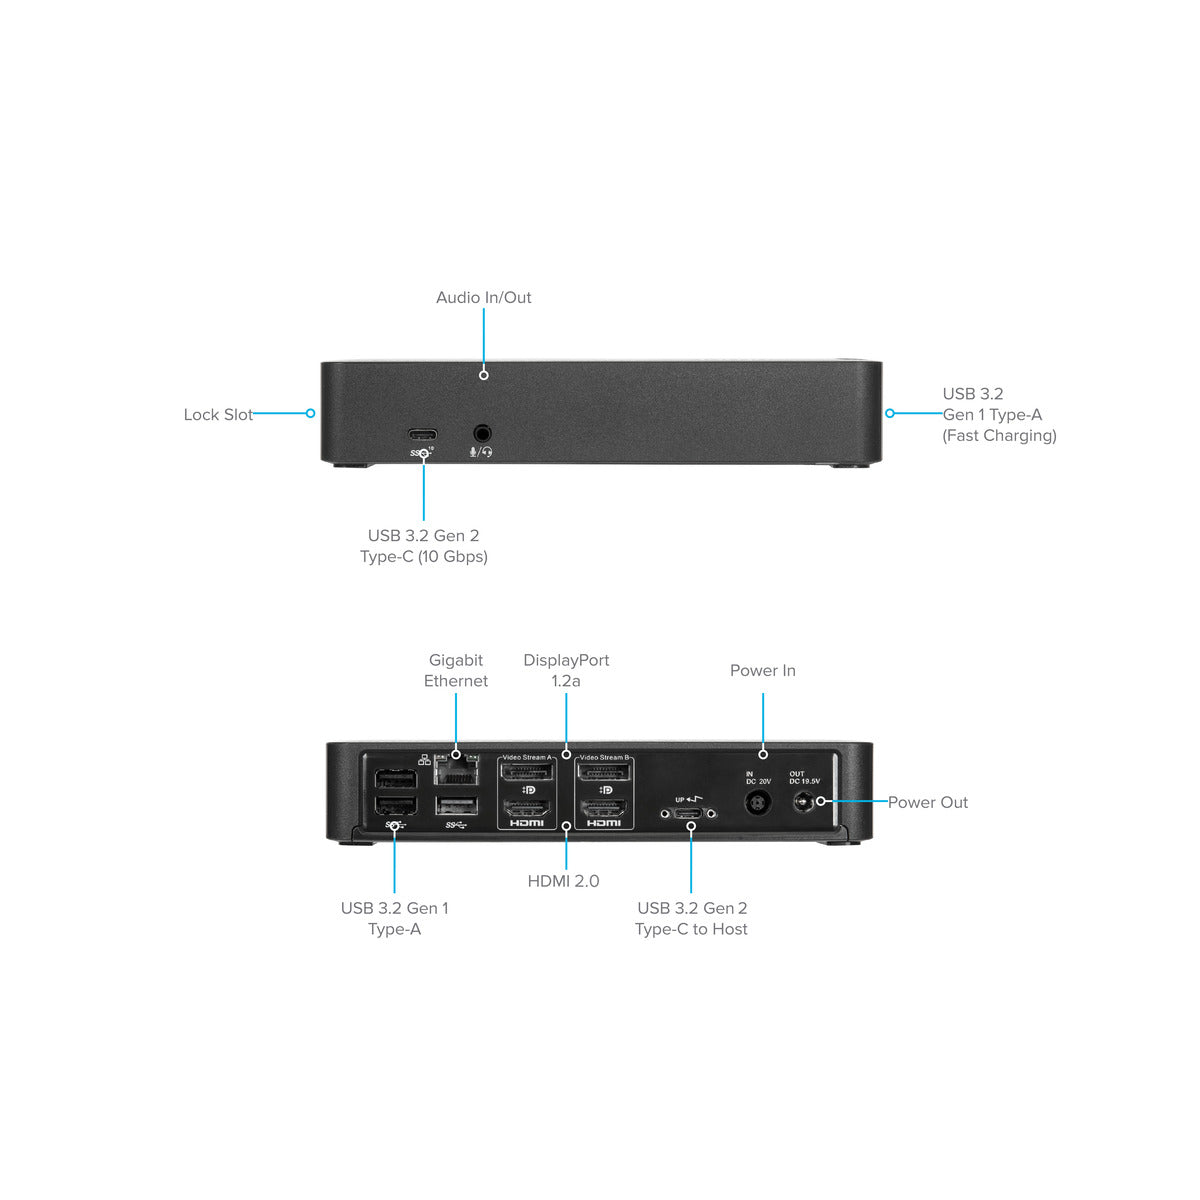 Targus DOCK182 USB-C DisplayLink Universal Docking Station 擴充基座